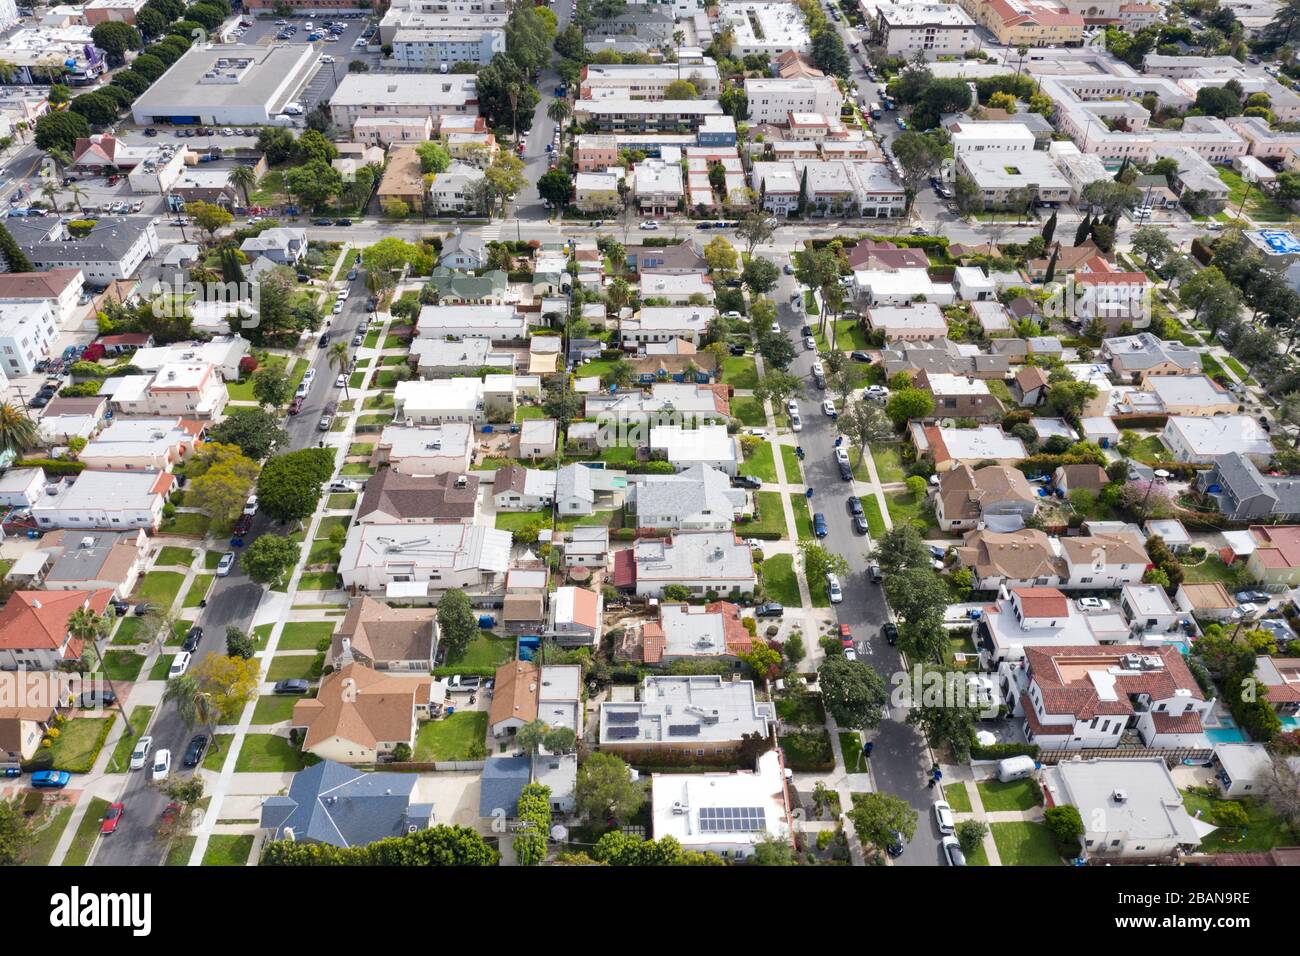 https://c8.alamy.com/comp/2BAN9RE/aerial-view-above-los-feliz-neighborhood-2BAN9RE.jpg